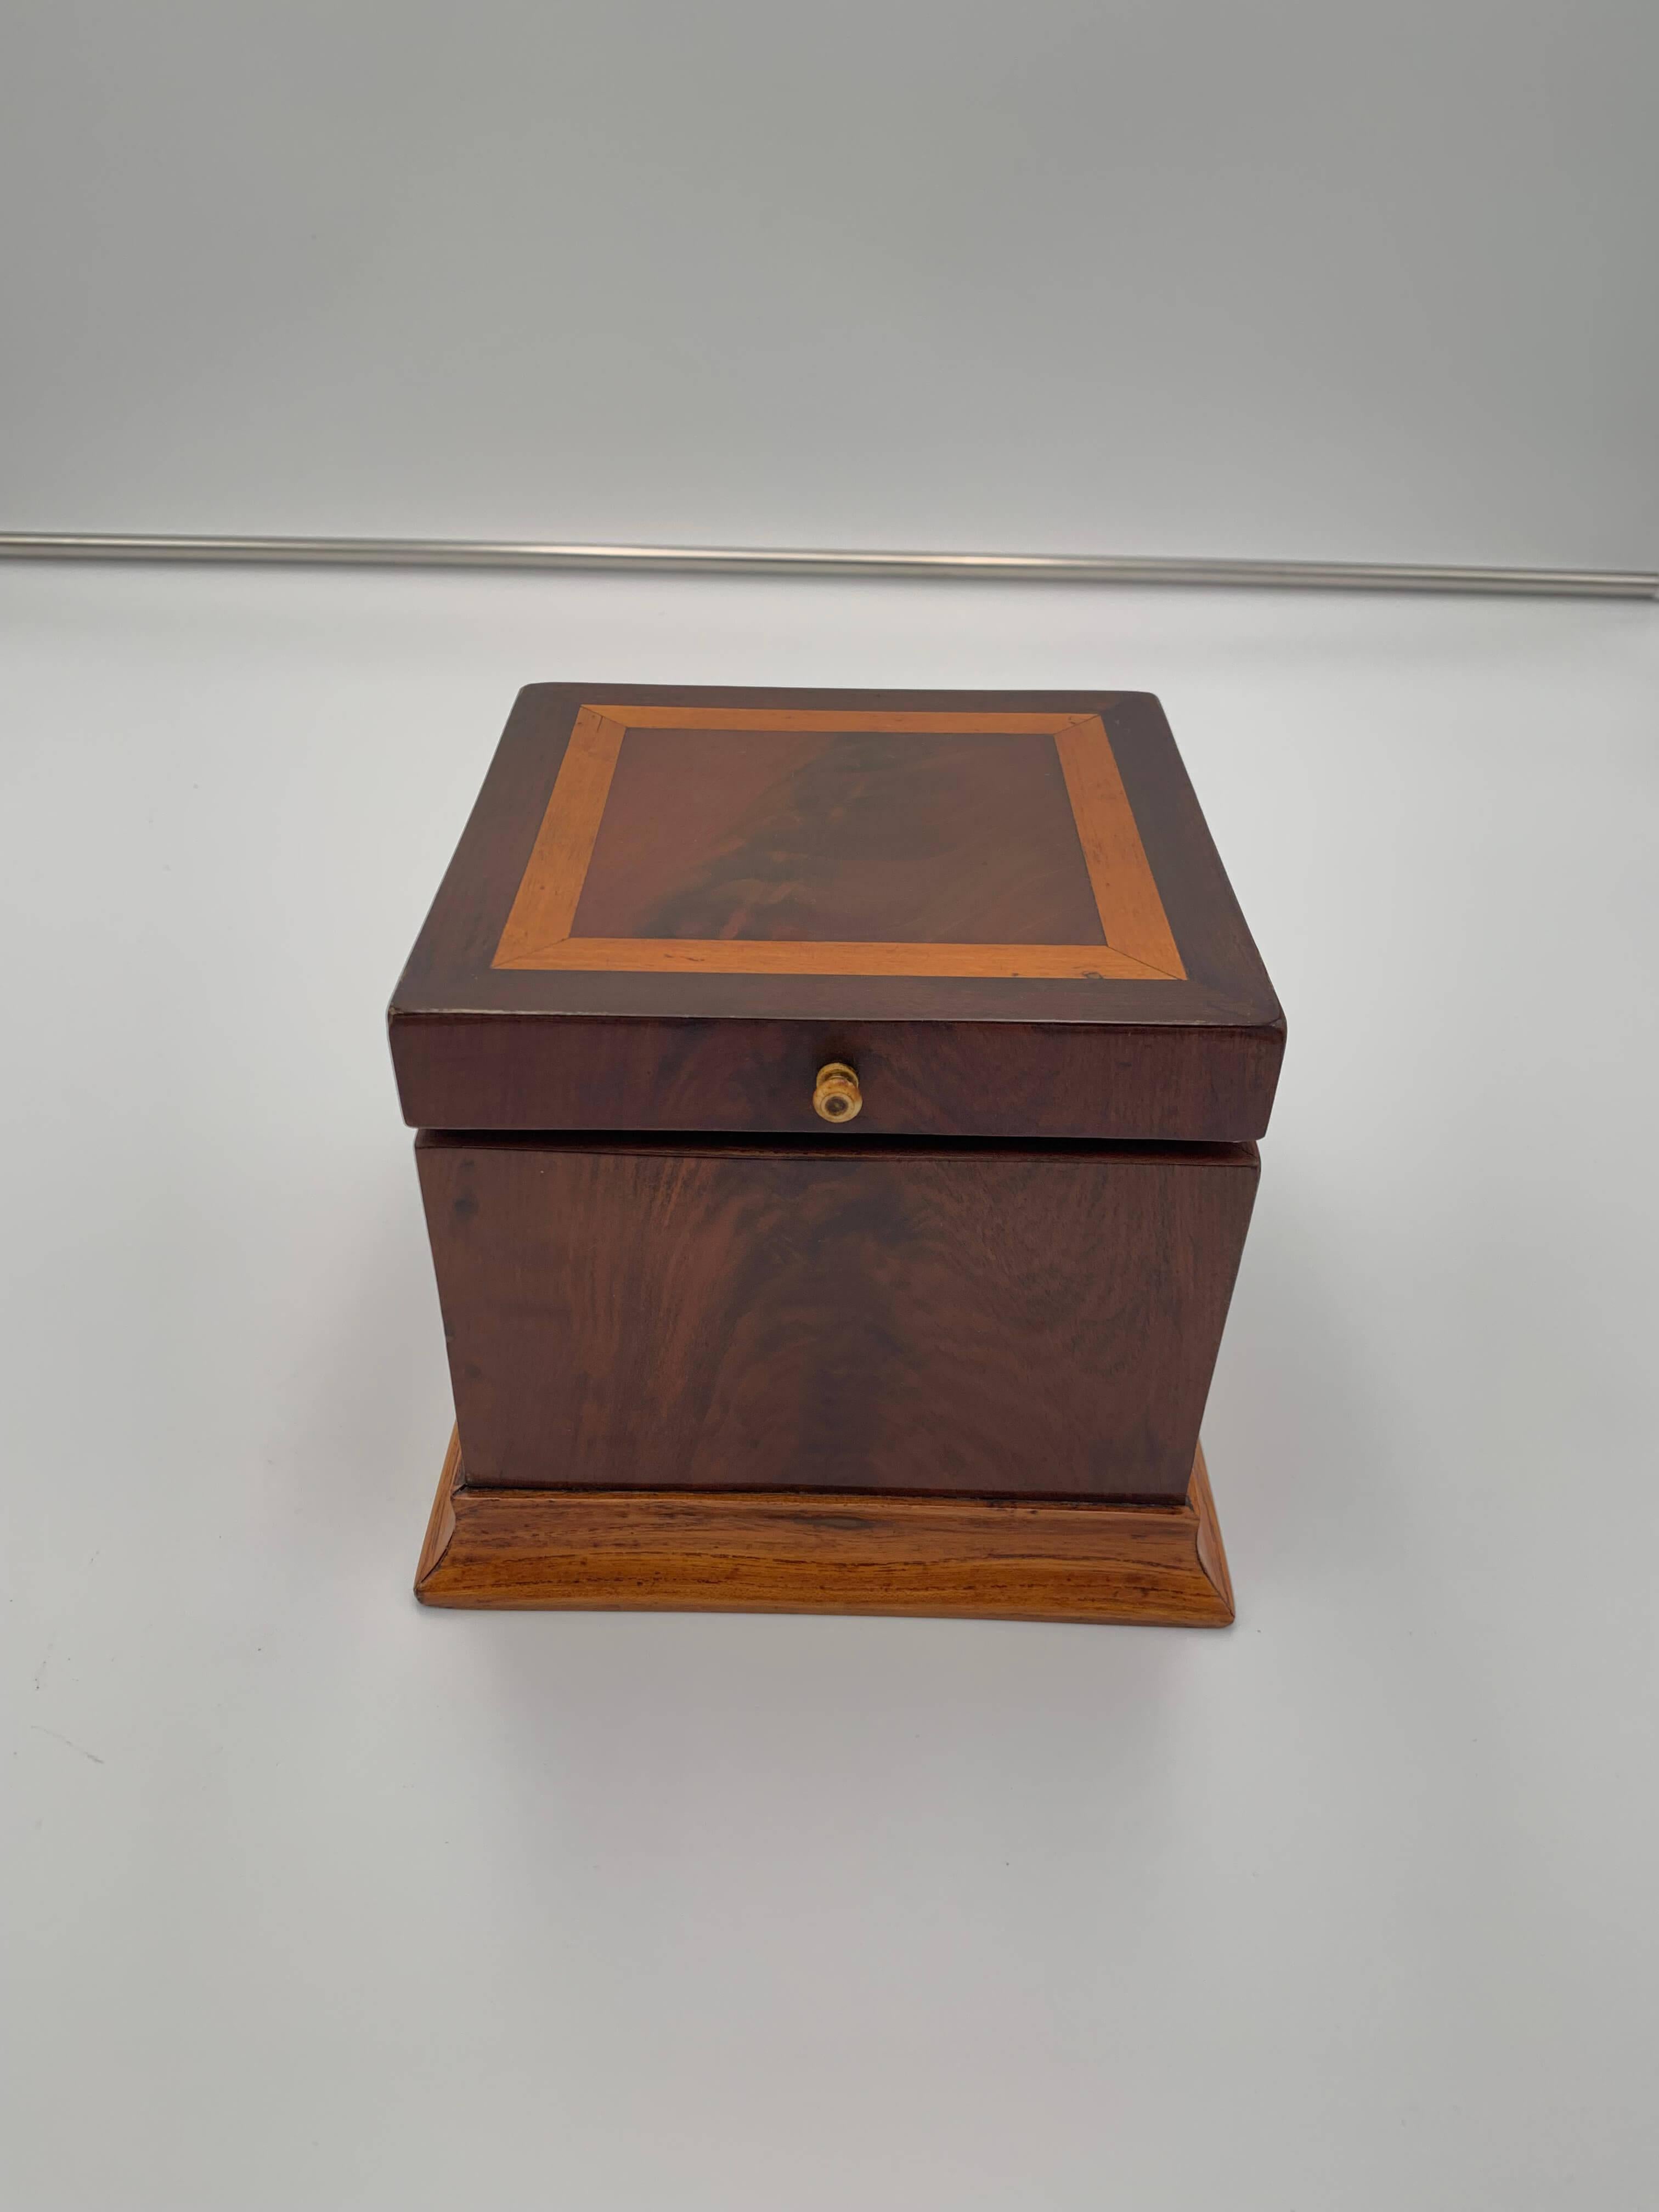 Cubic Biedermeier box, mahogany and maple, Austria circa 1840

Rare cubic shaped decorative box form the Biedermeier period.
Mahogany veneered with maple inlays. Oak base. Restored and shellac hand-polished

Dimensions: H 14.2 x W 17.7 cm x D